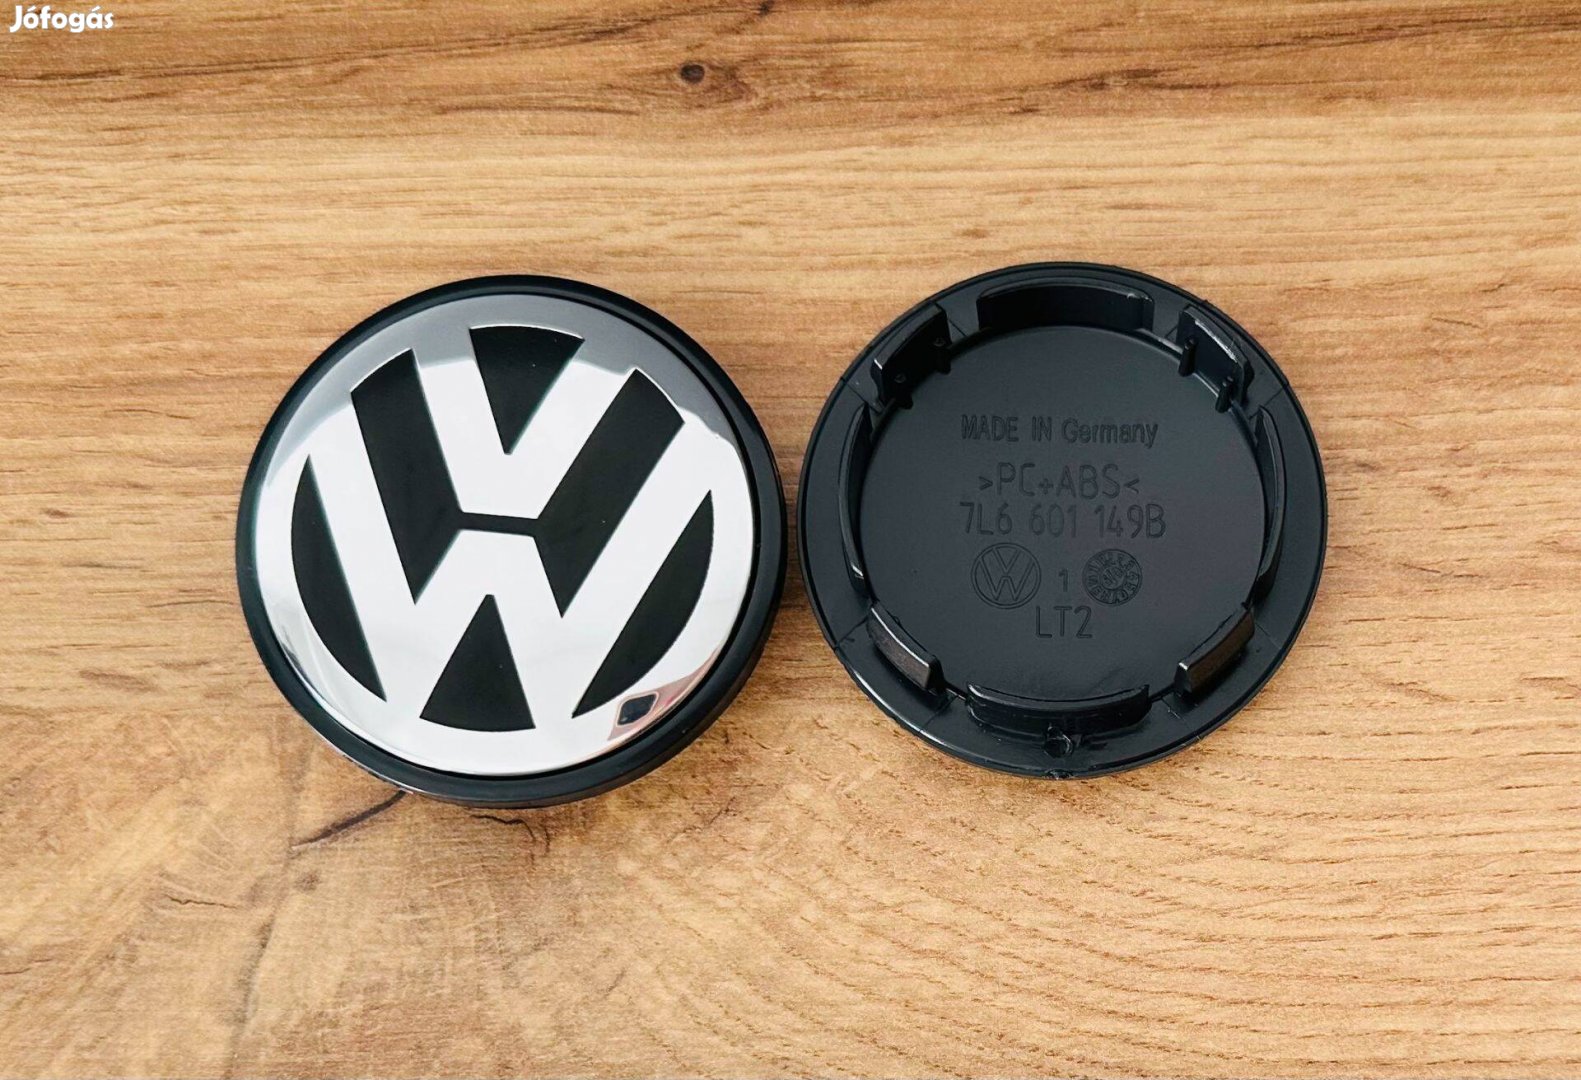 Új Volkswagen 70mm felni kupak felniközép felnikupak 7L6601149B